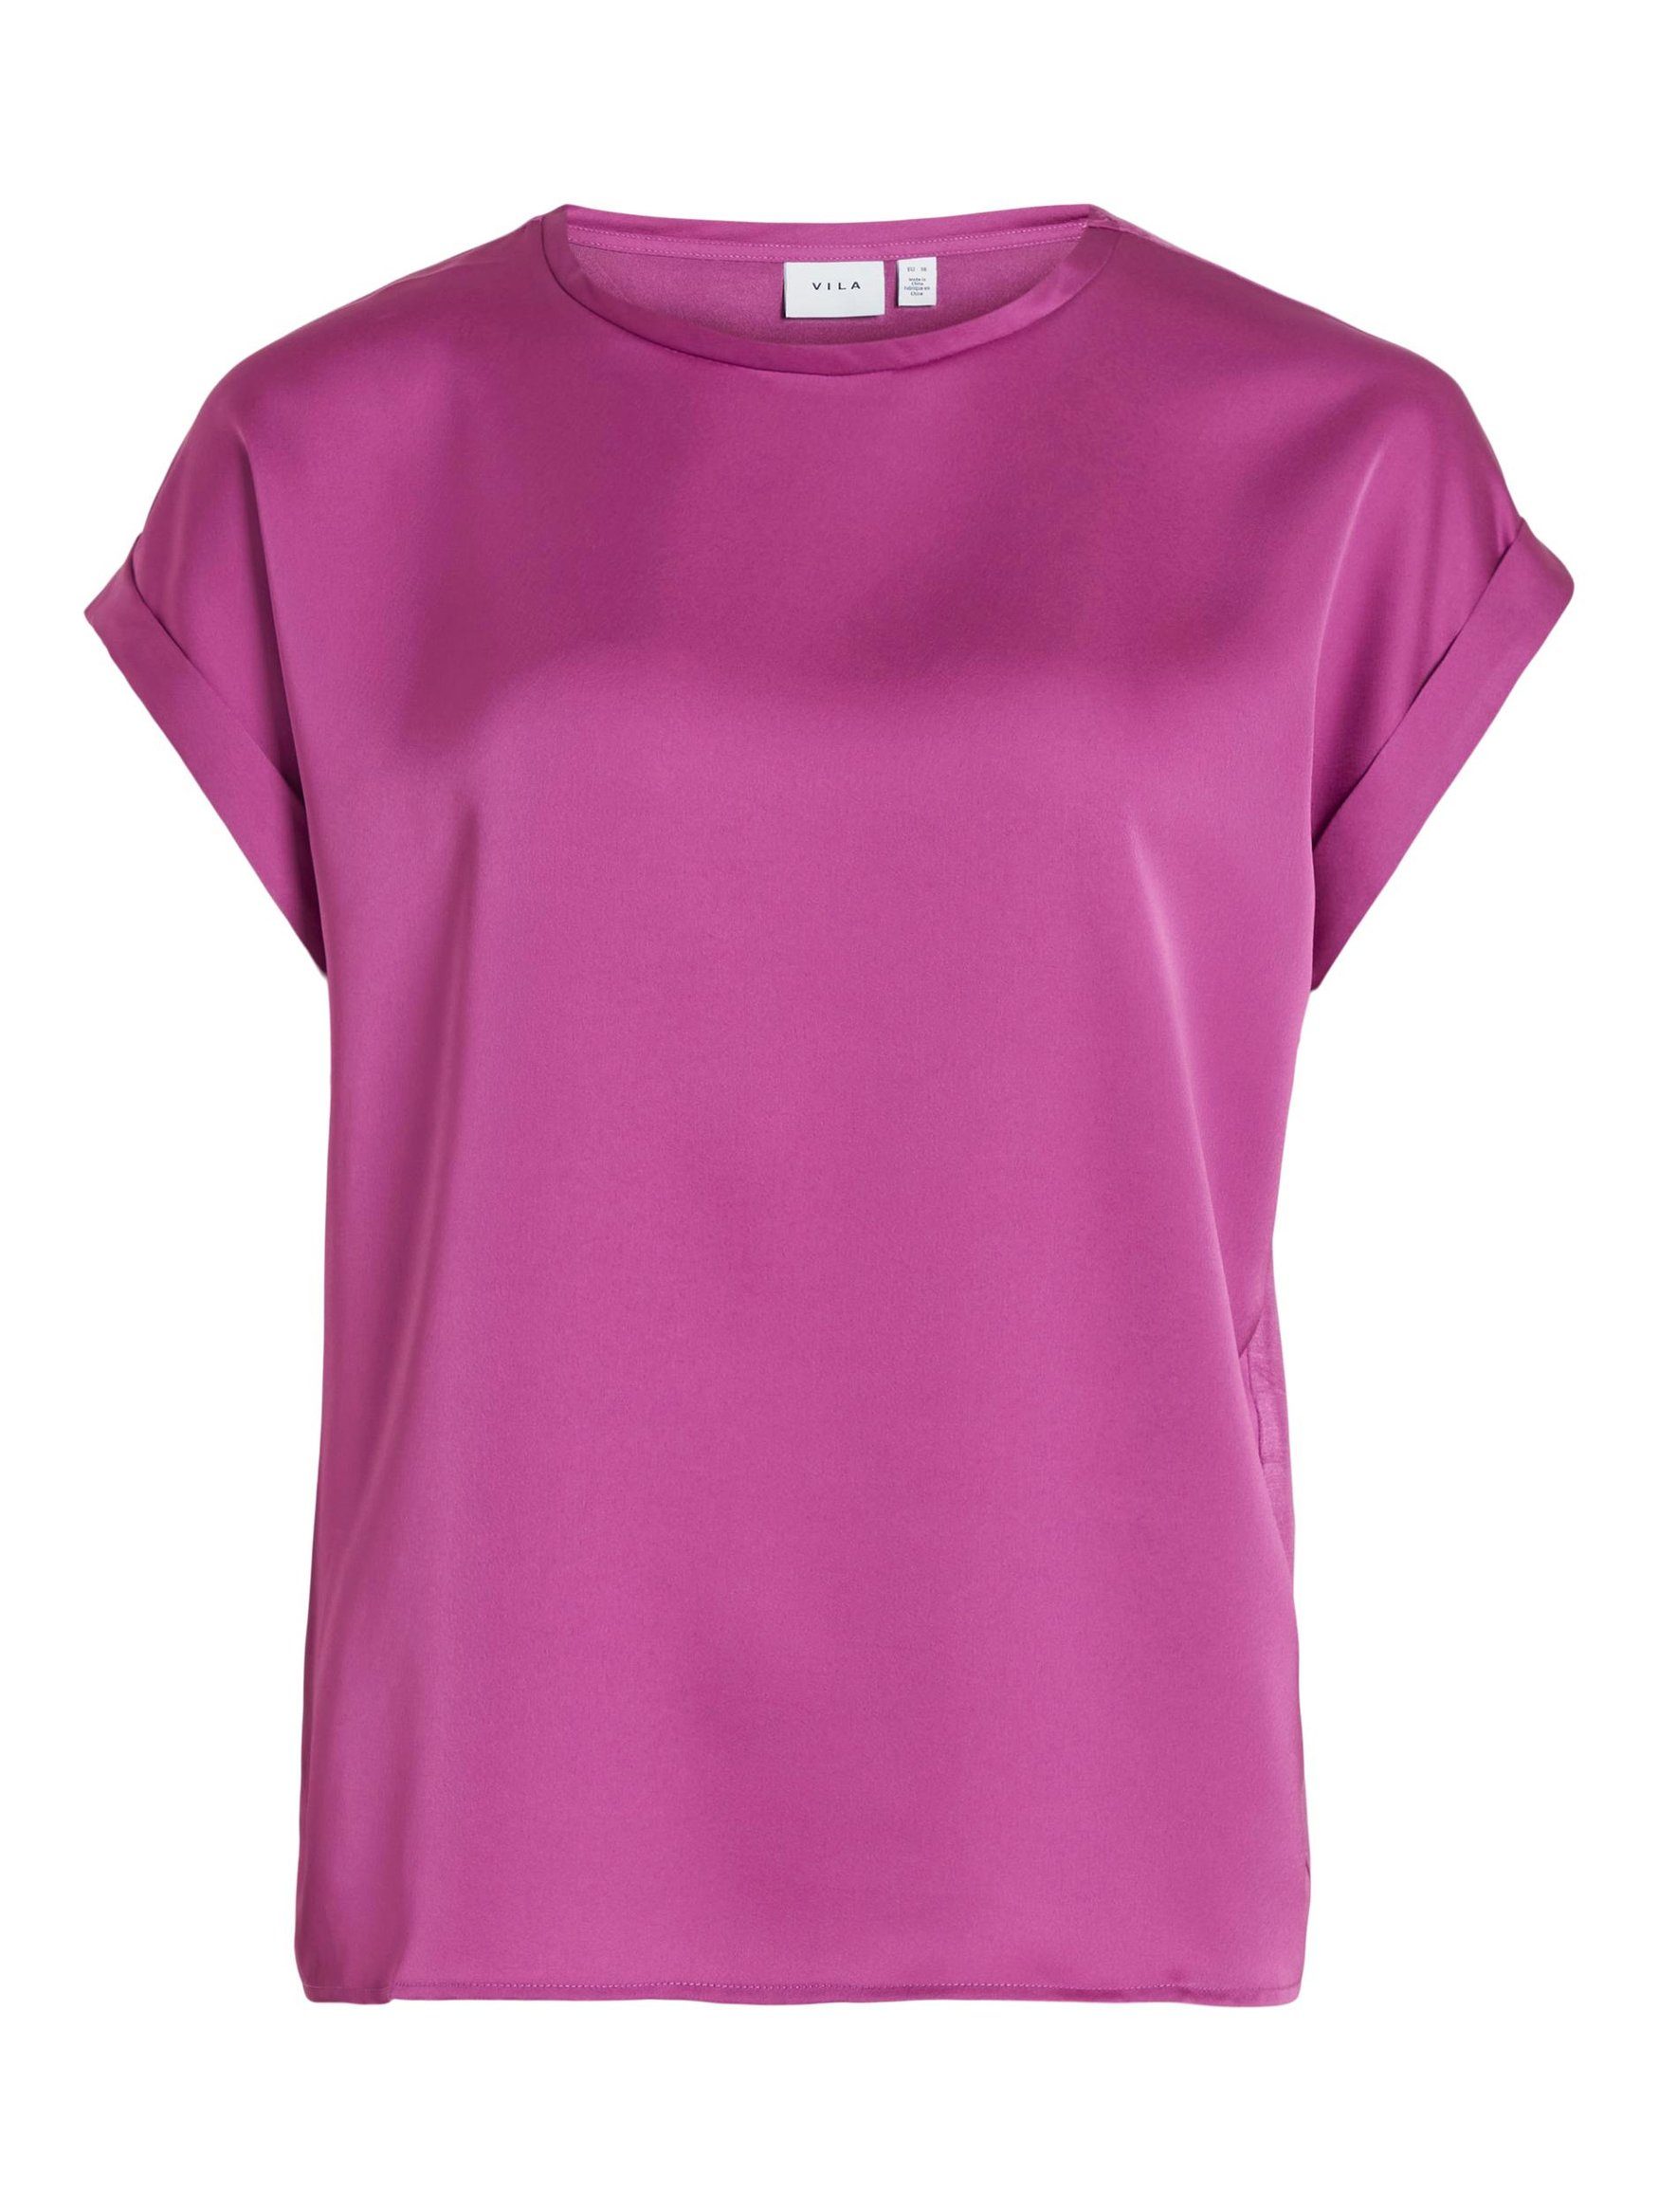 Vila T-Shirt Satain Blusen T-Shirt Kurzarm Basic Top Glänzend VIELLETTE 4599 in Neon Pink